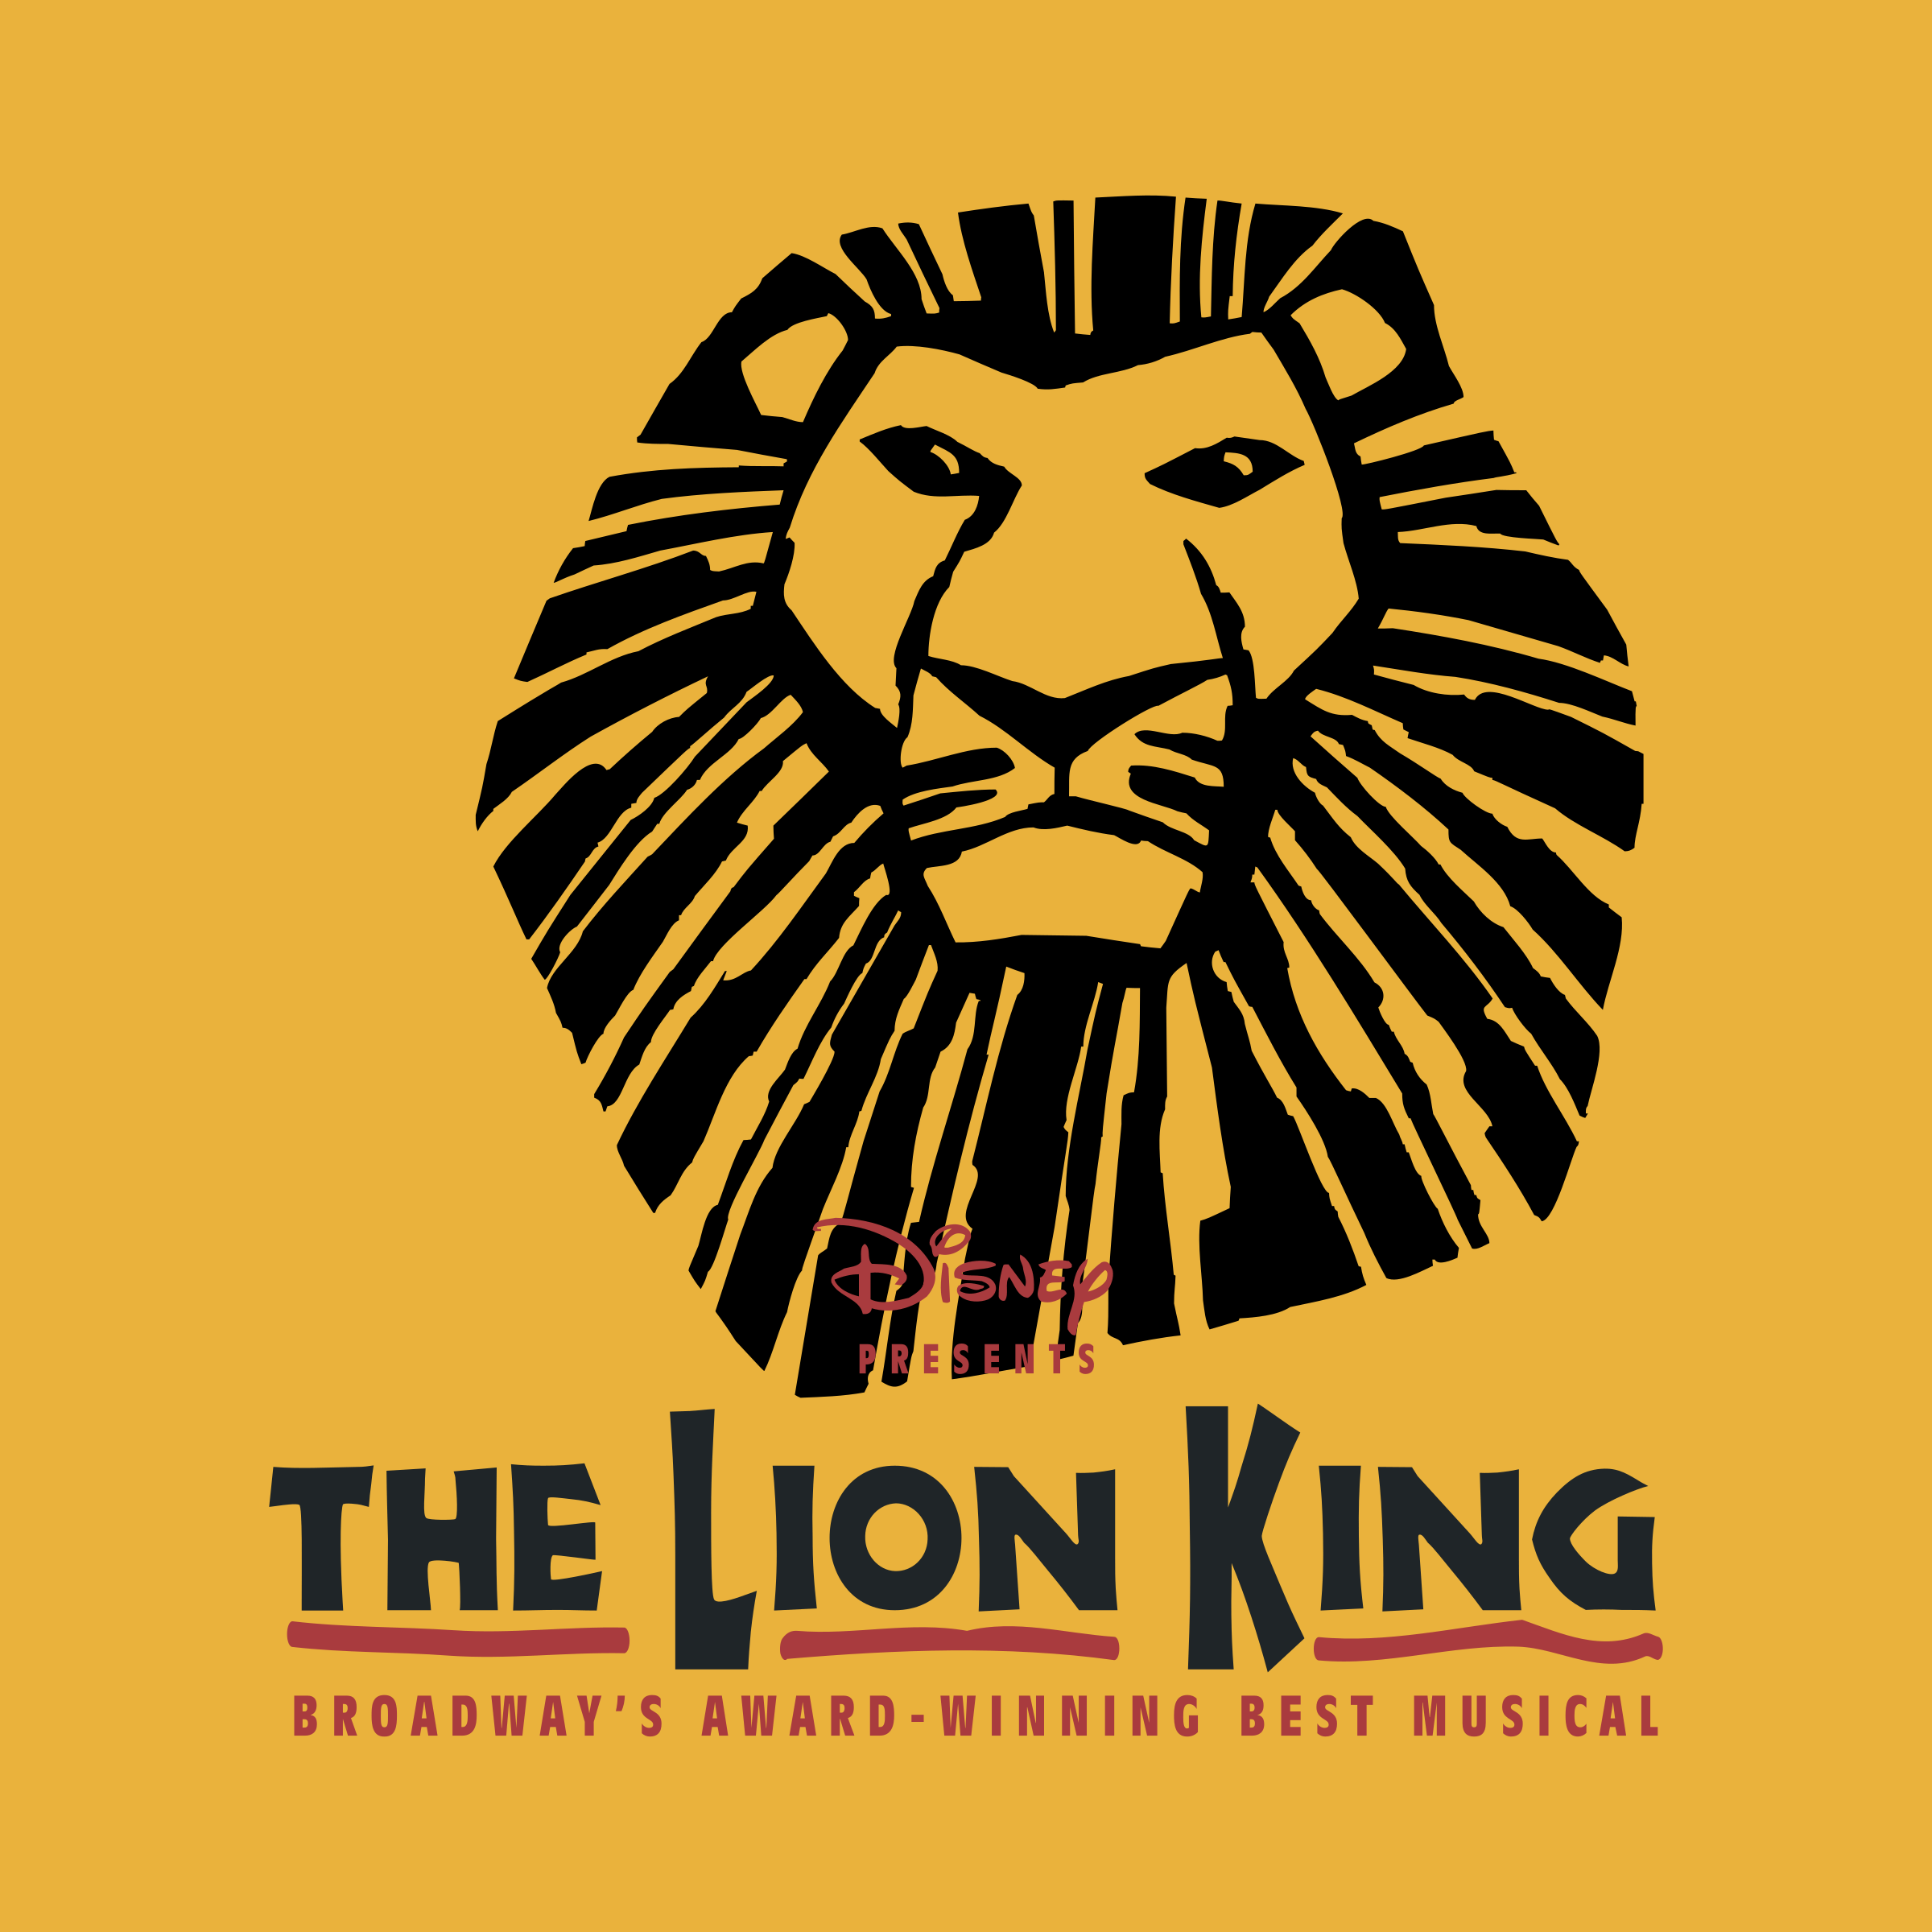 The Lion King Logo - The Lion King Logo PNG Transparent & SVG Vector - Freebie Supply